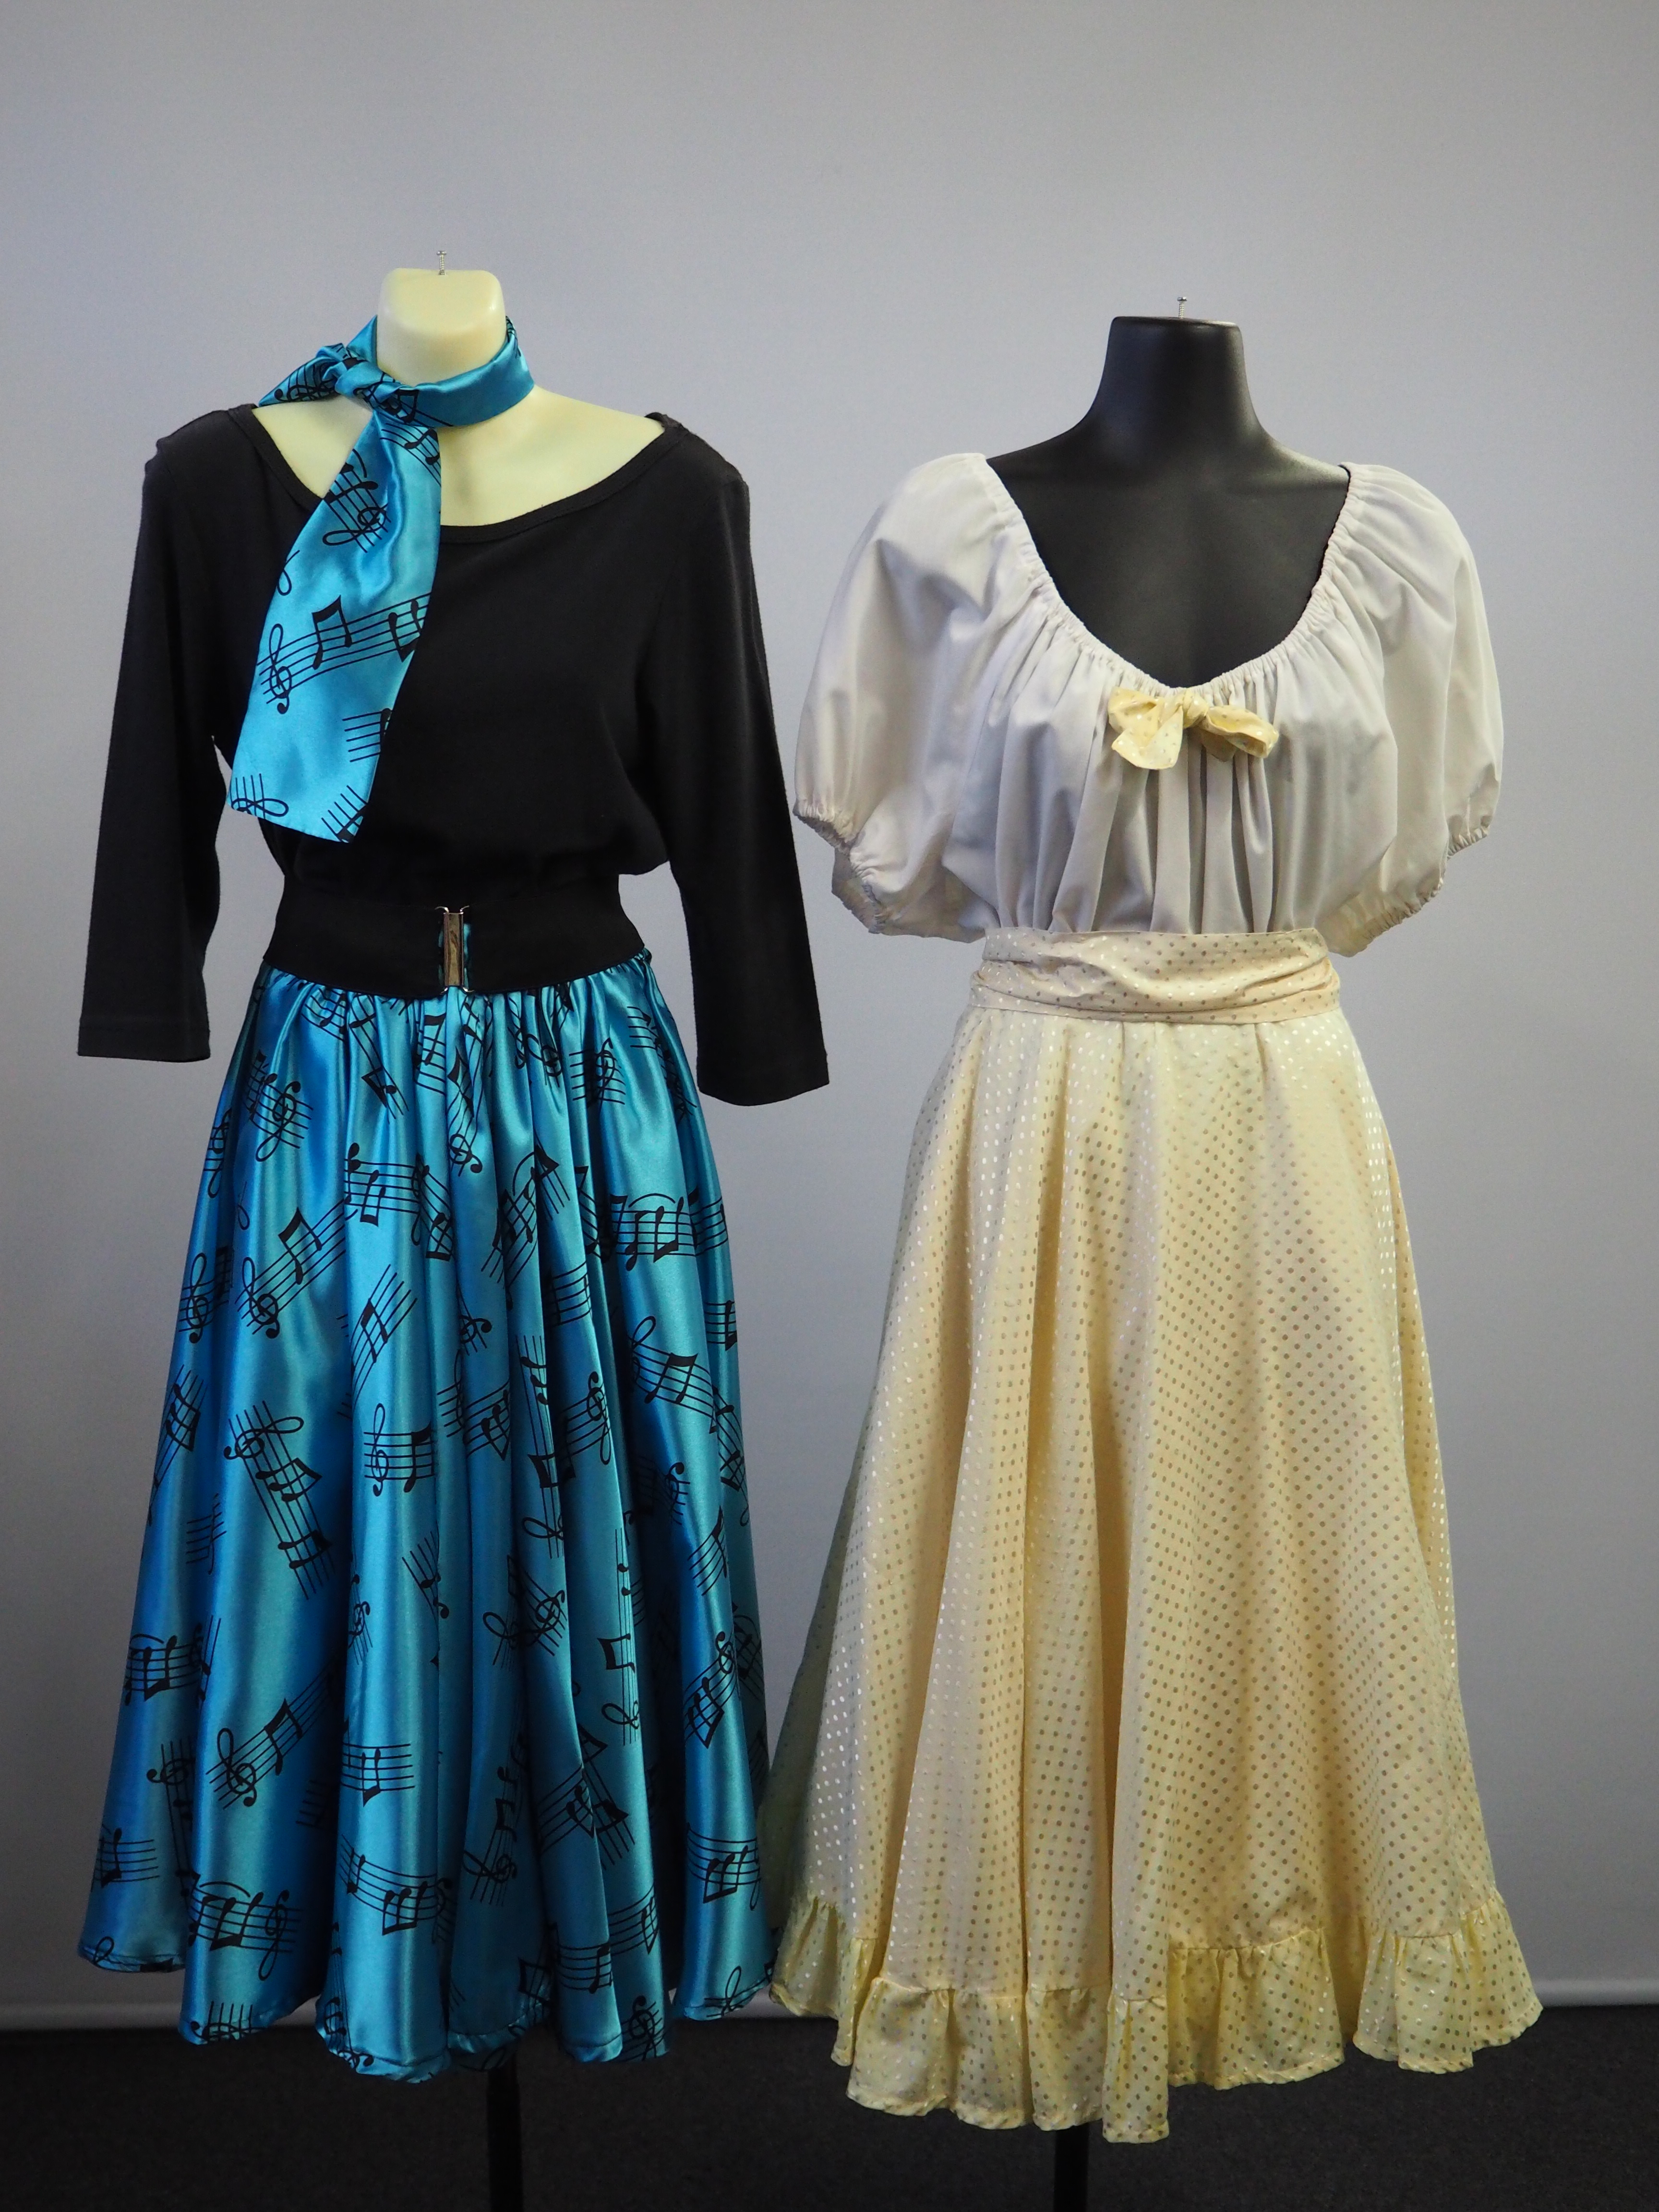 LADIES 1950S FANCY DRESS COSTUME ROCK N ROLL WOMENS OUTFIT 50S 60S FILM  MOVIE 